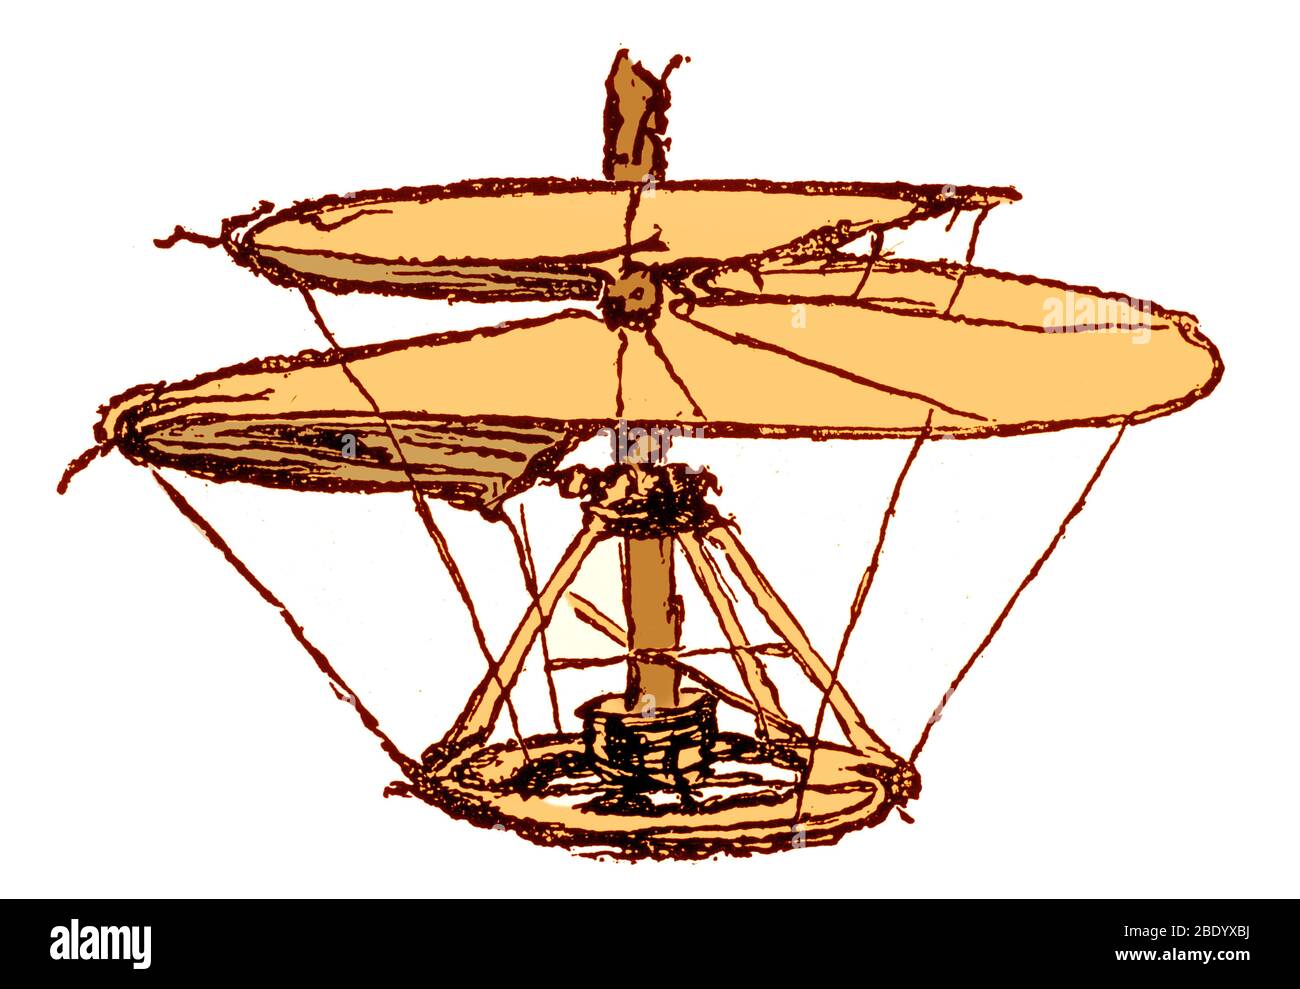 Tornillo helicoidal o helicóptero, Leonardo da Vinci Foto de stock